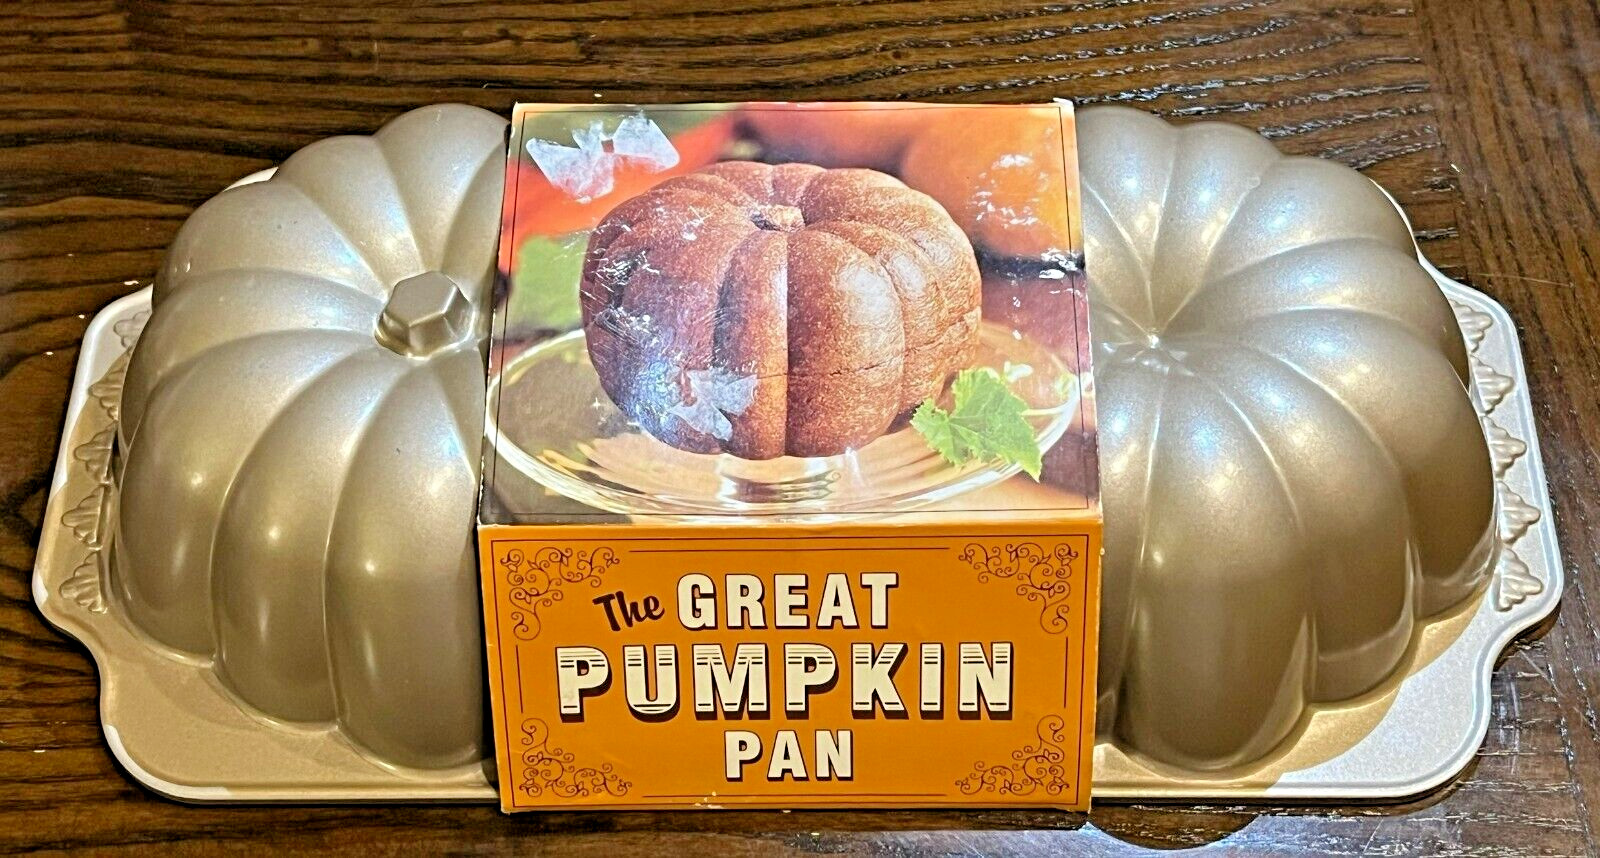 The Great Pumpkin Pan Williams-Sonoma Nordic Ware Bundt Cake Vtg 2004 USA - NEW